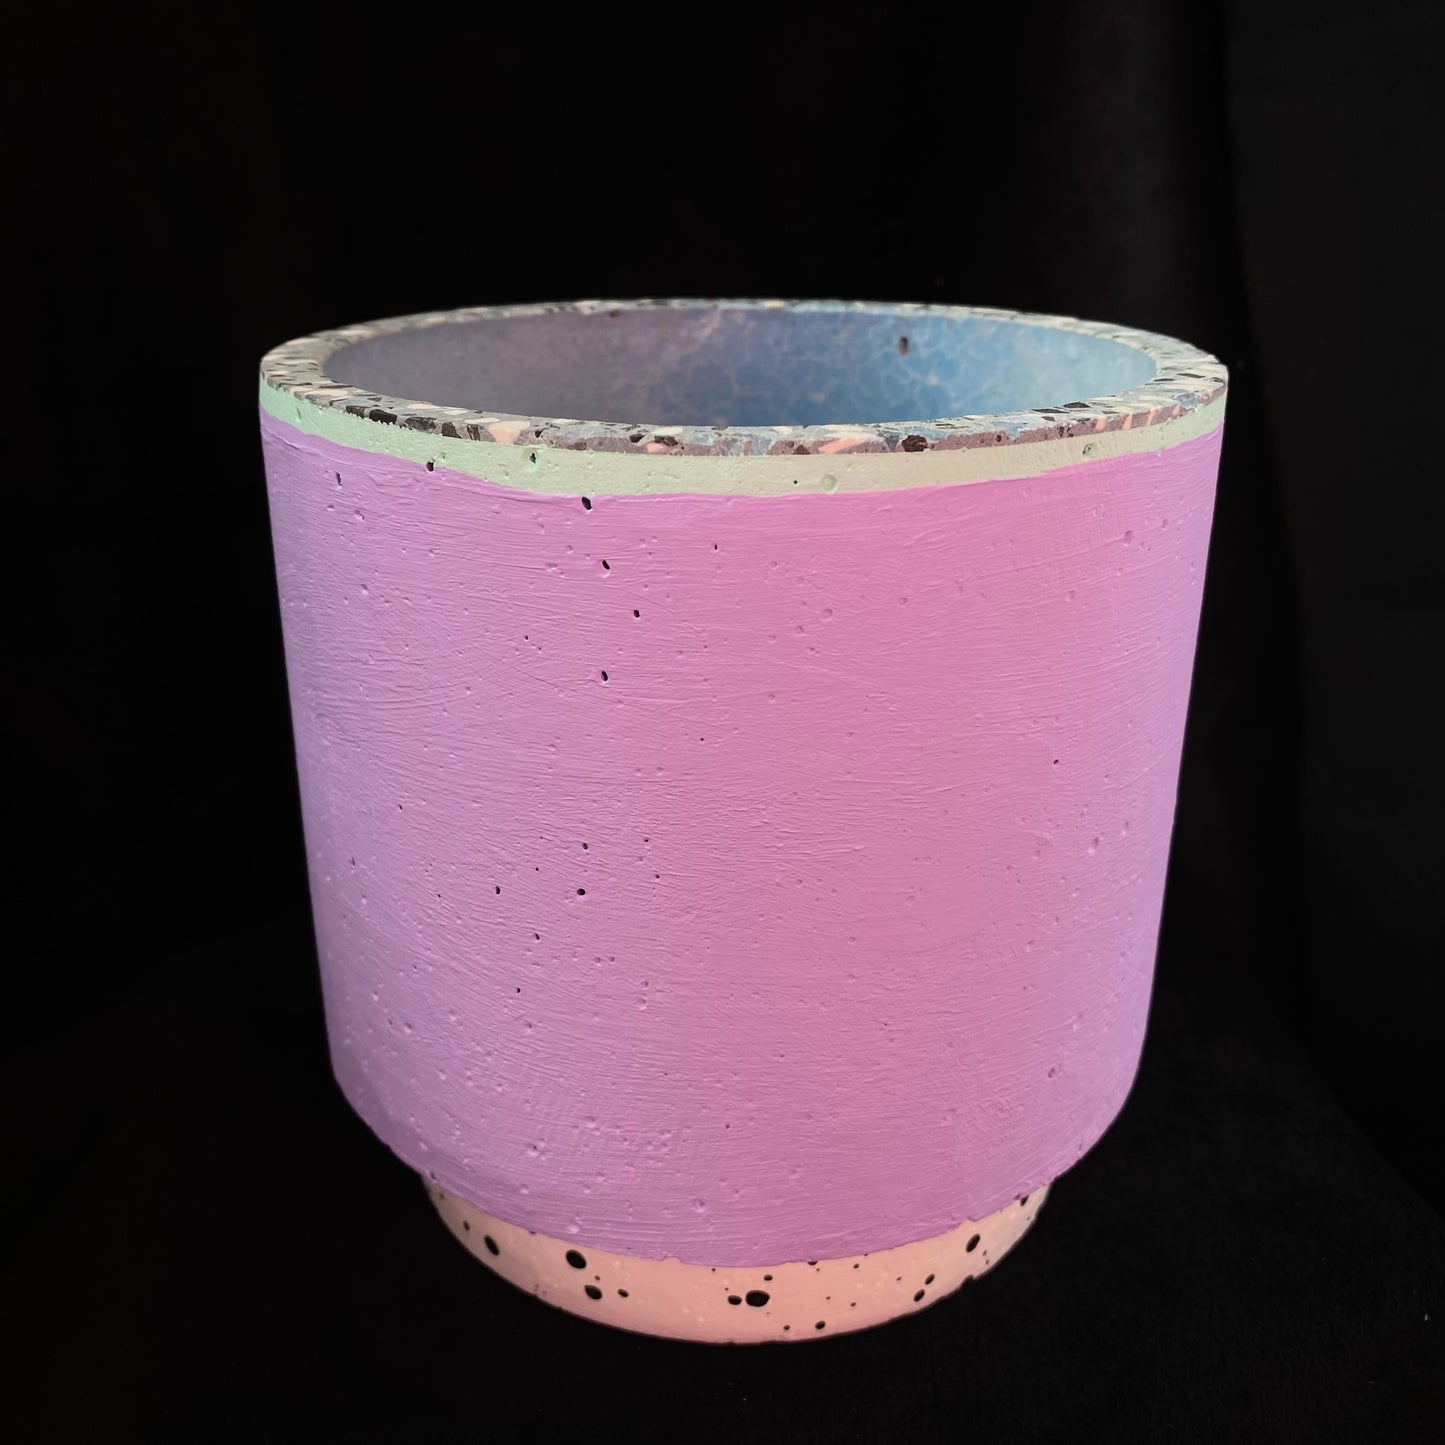 Modern Artifact Planter Purple Polka Dot With Drainage Hole